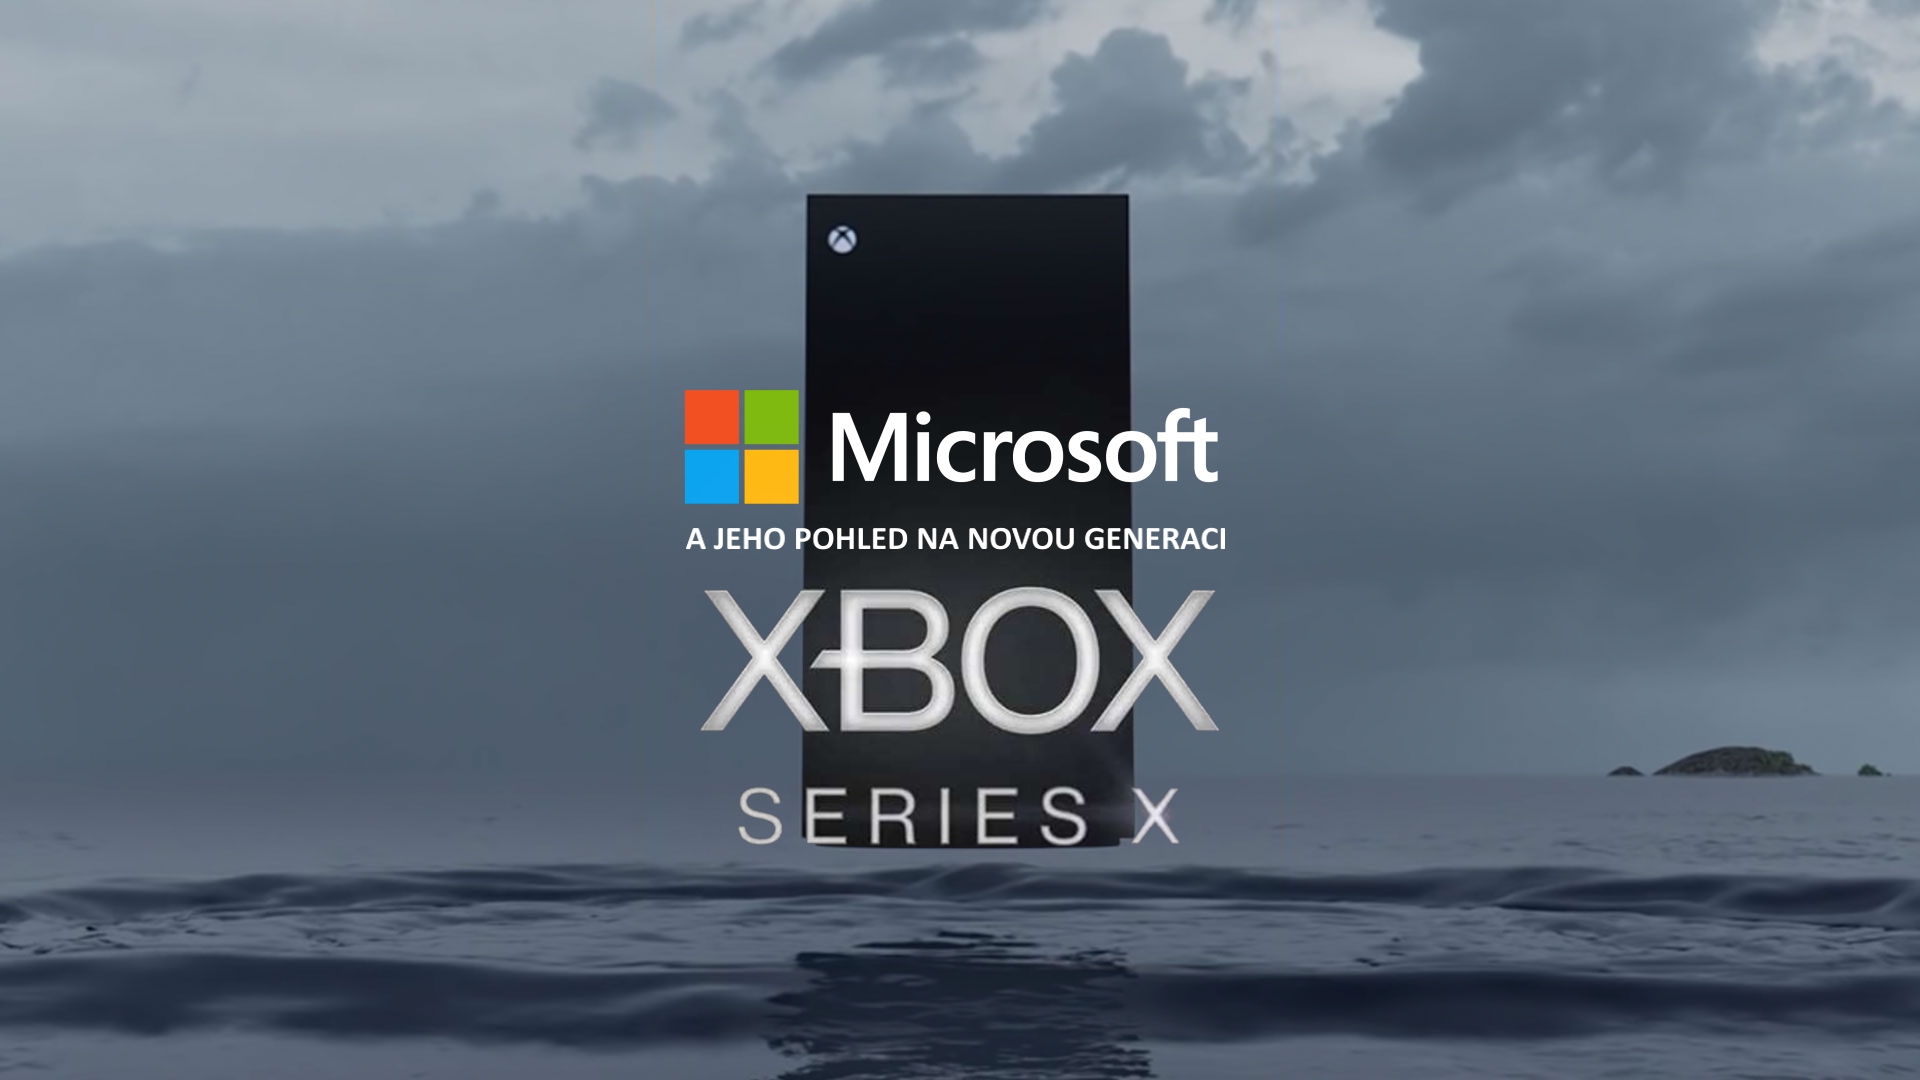 Microsoft a jeho pohled na novou generaci Xbox Series X